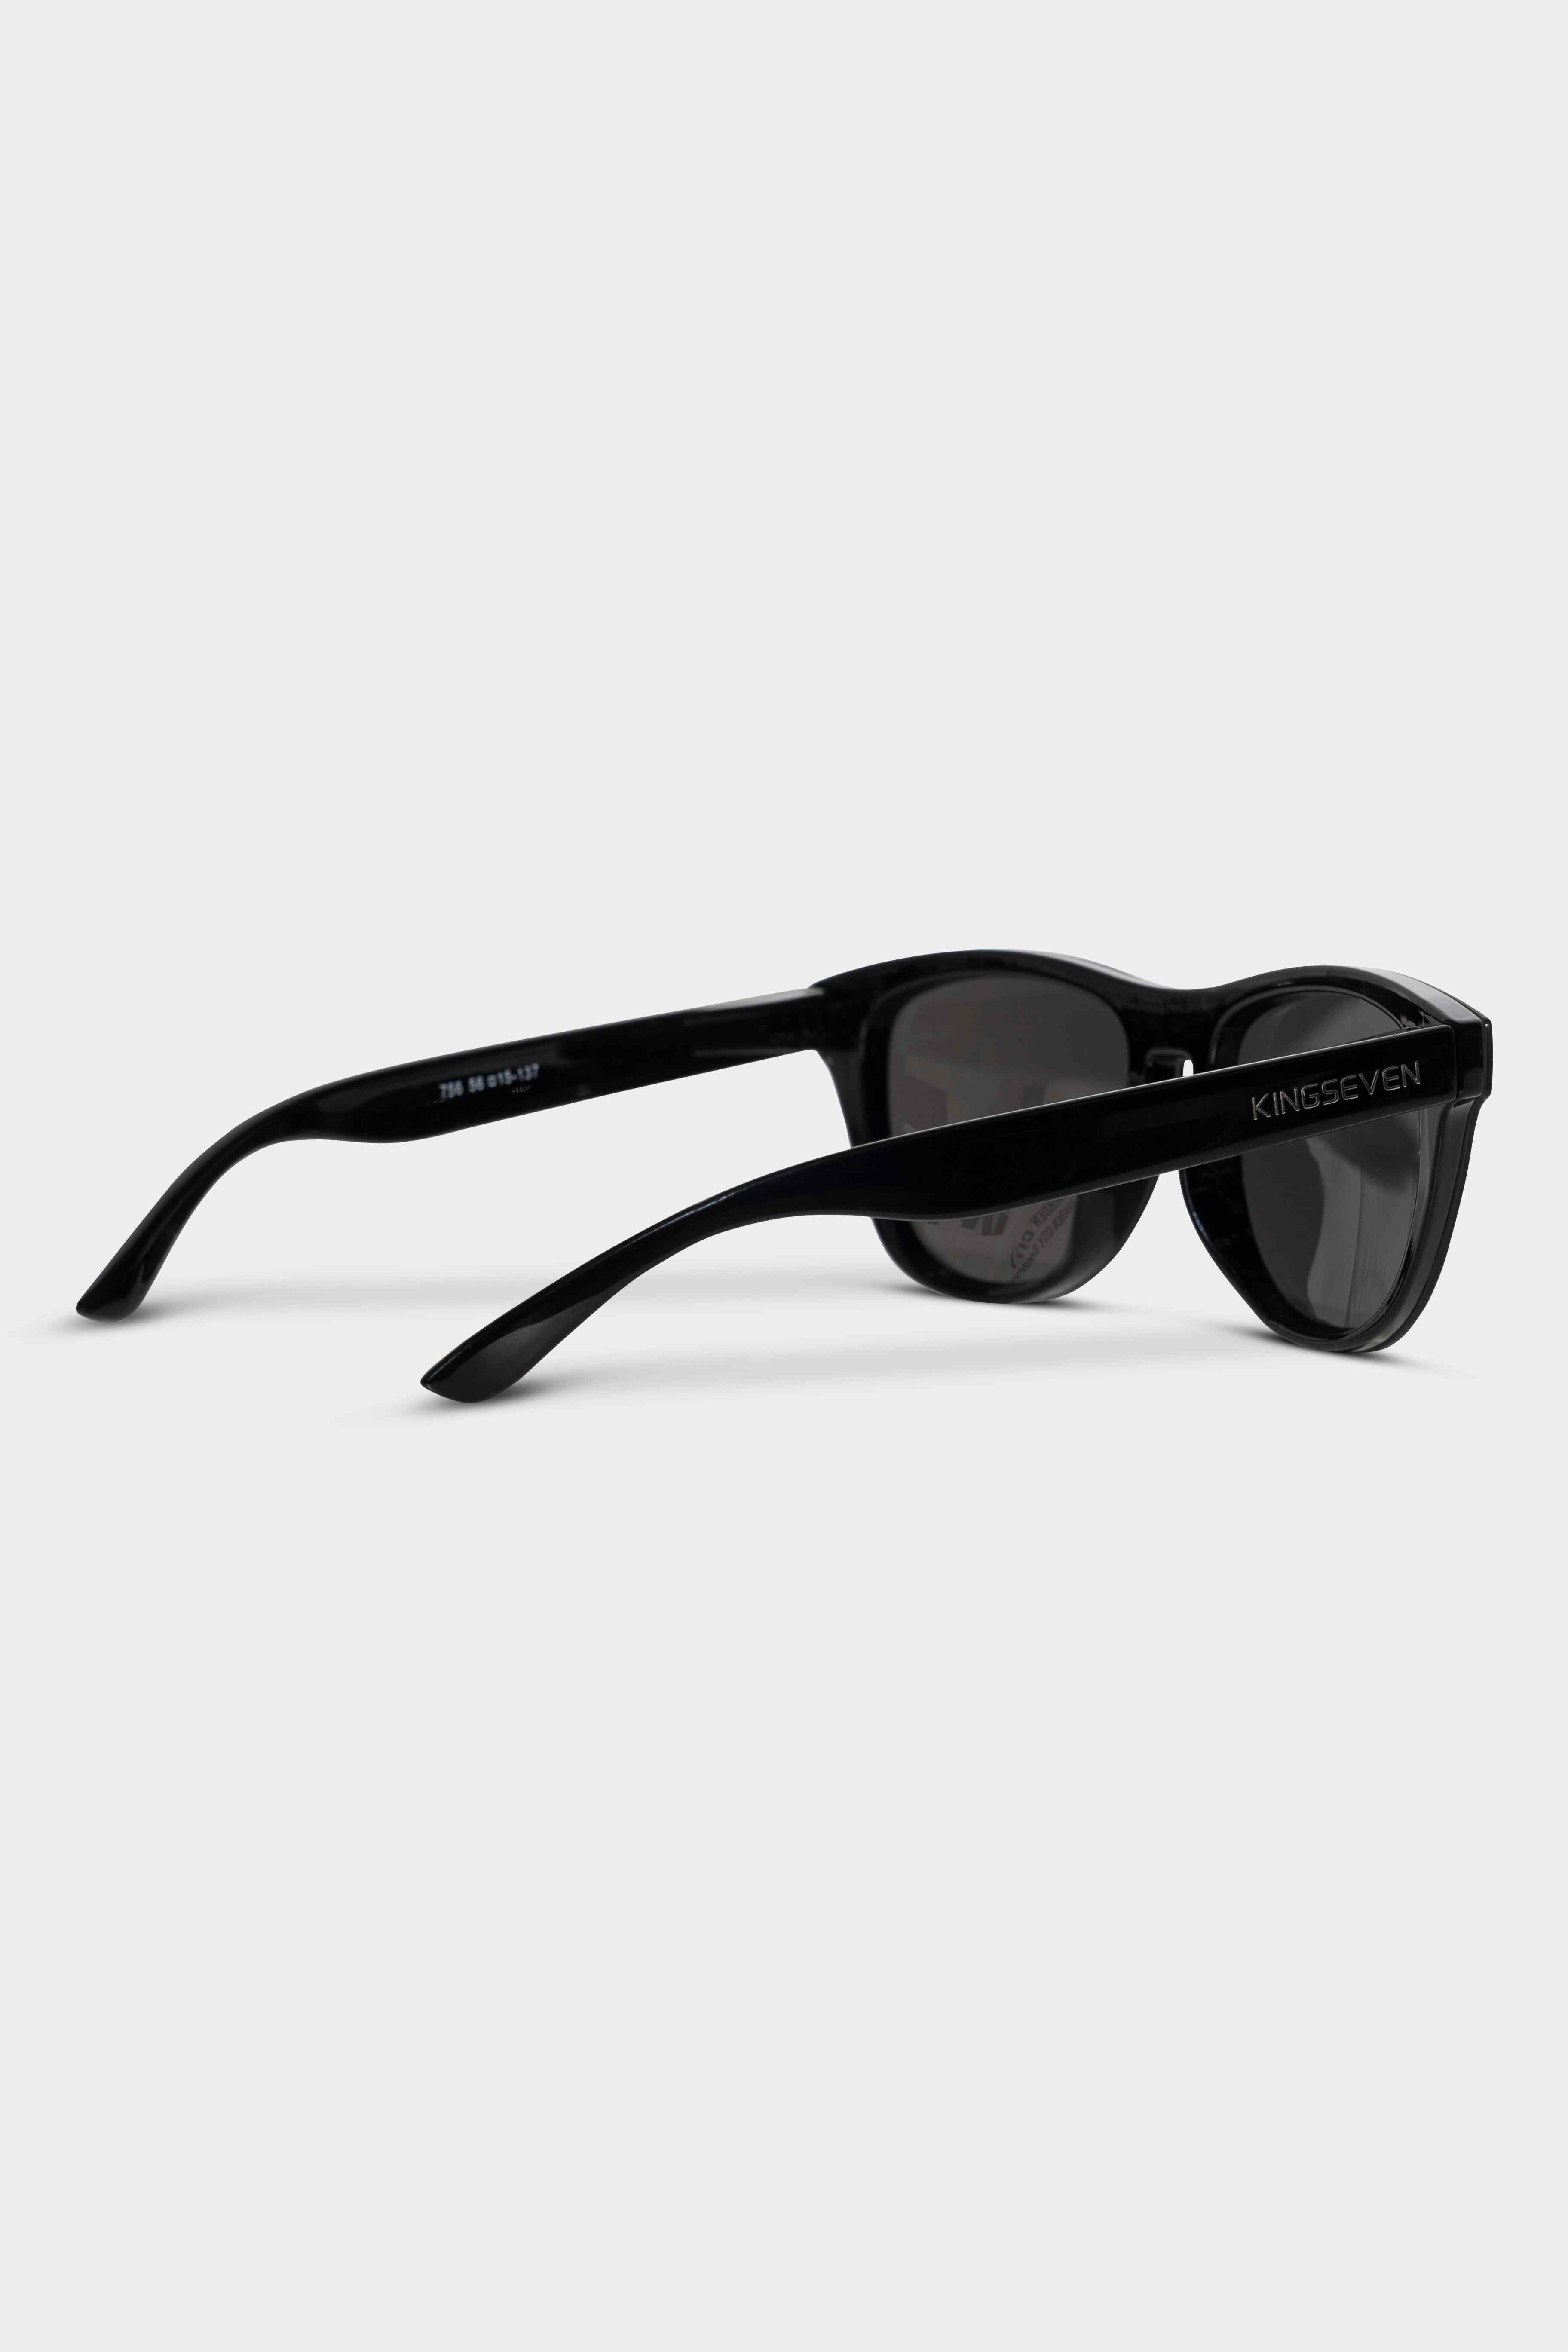 Kingseven Dhaka Sunglasses Black